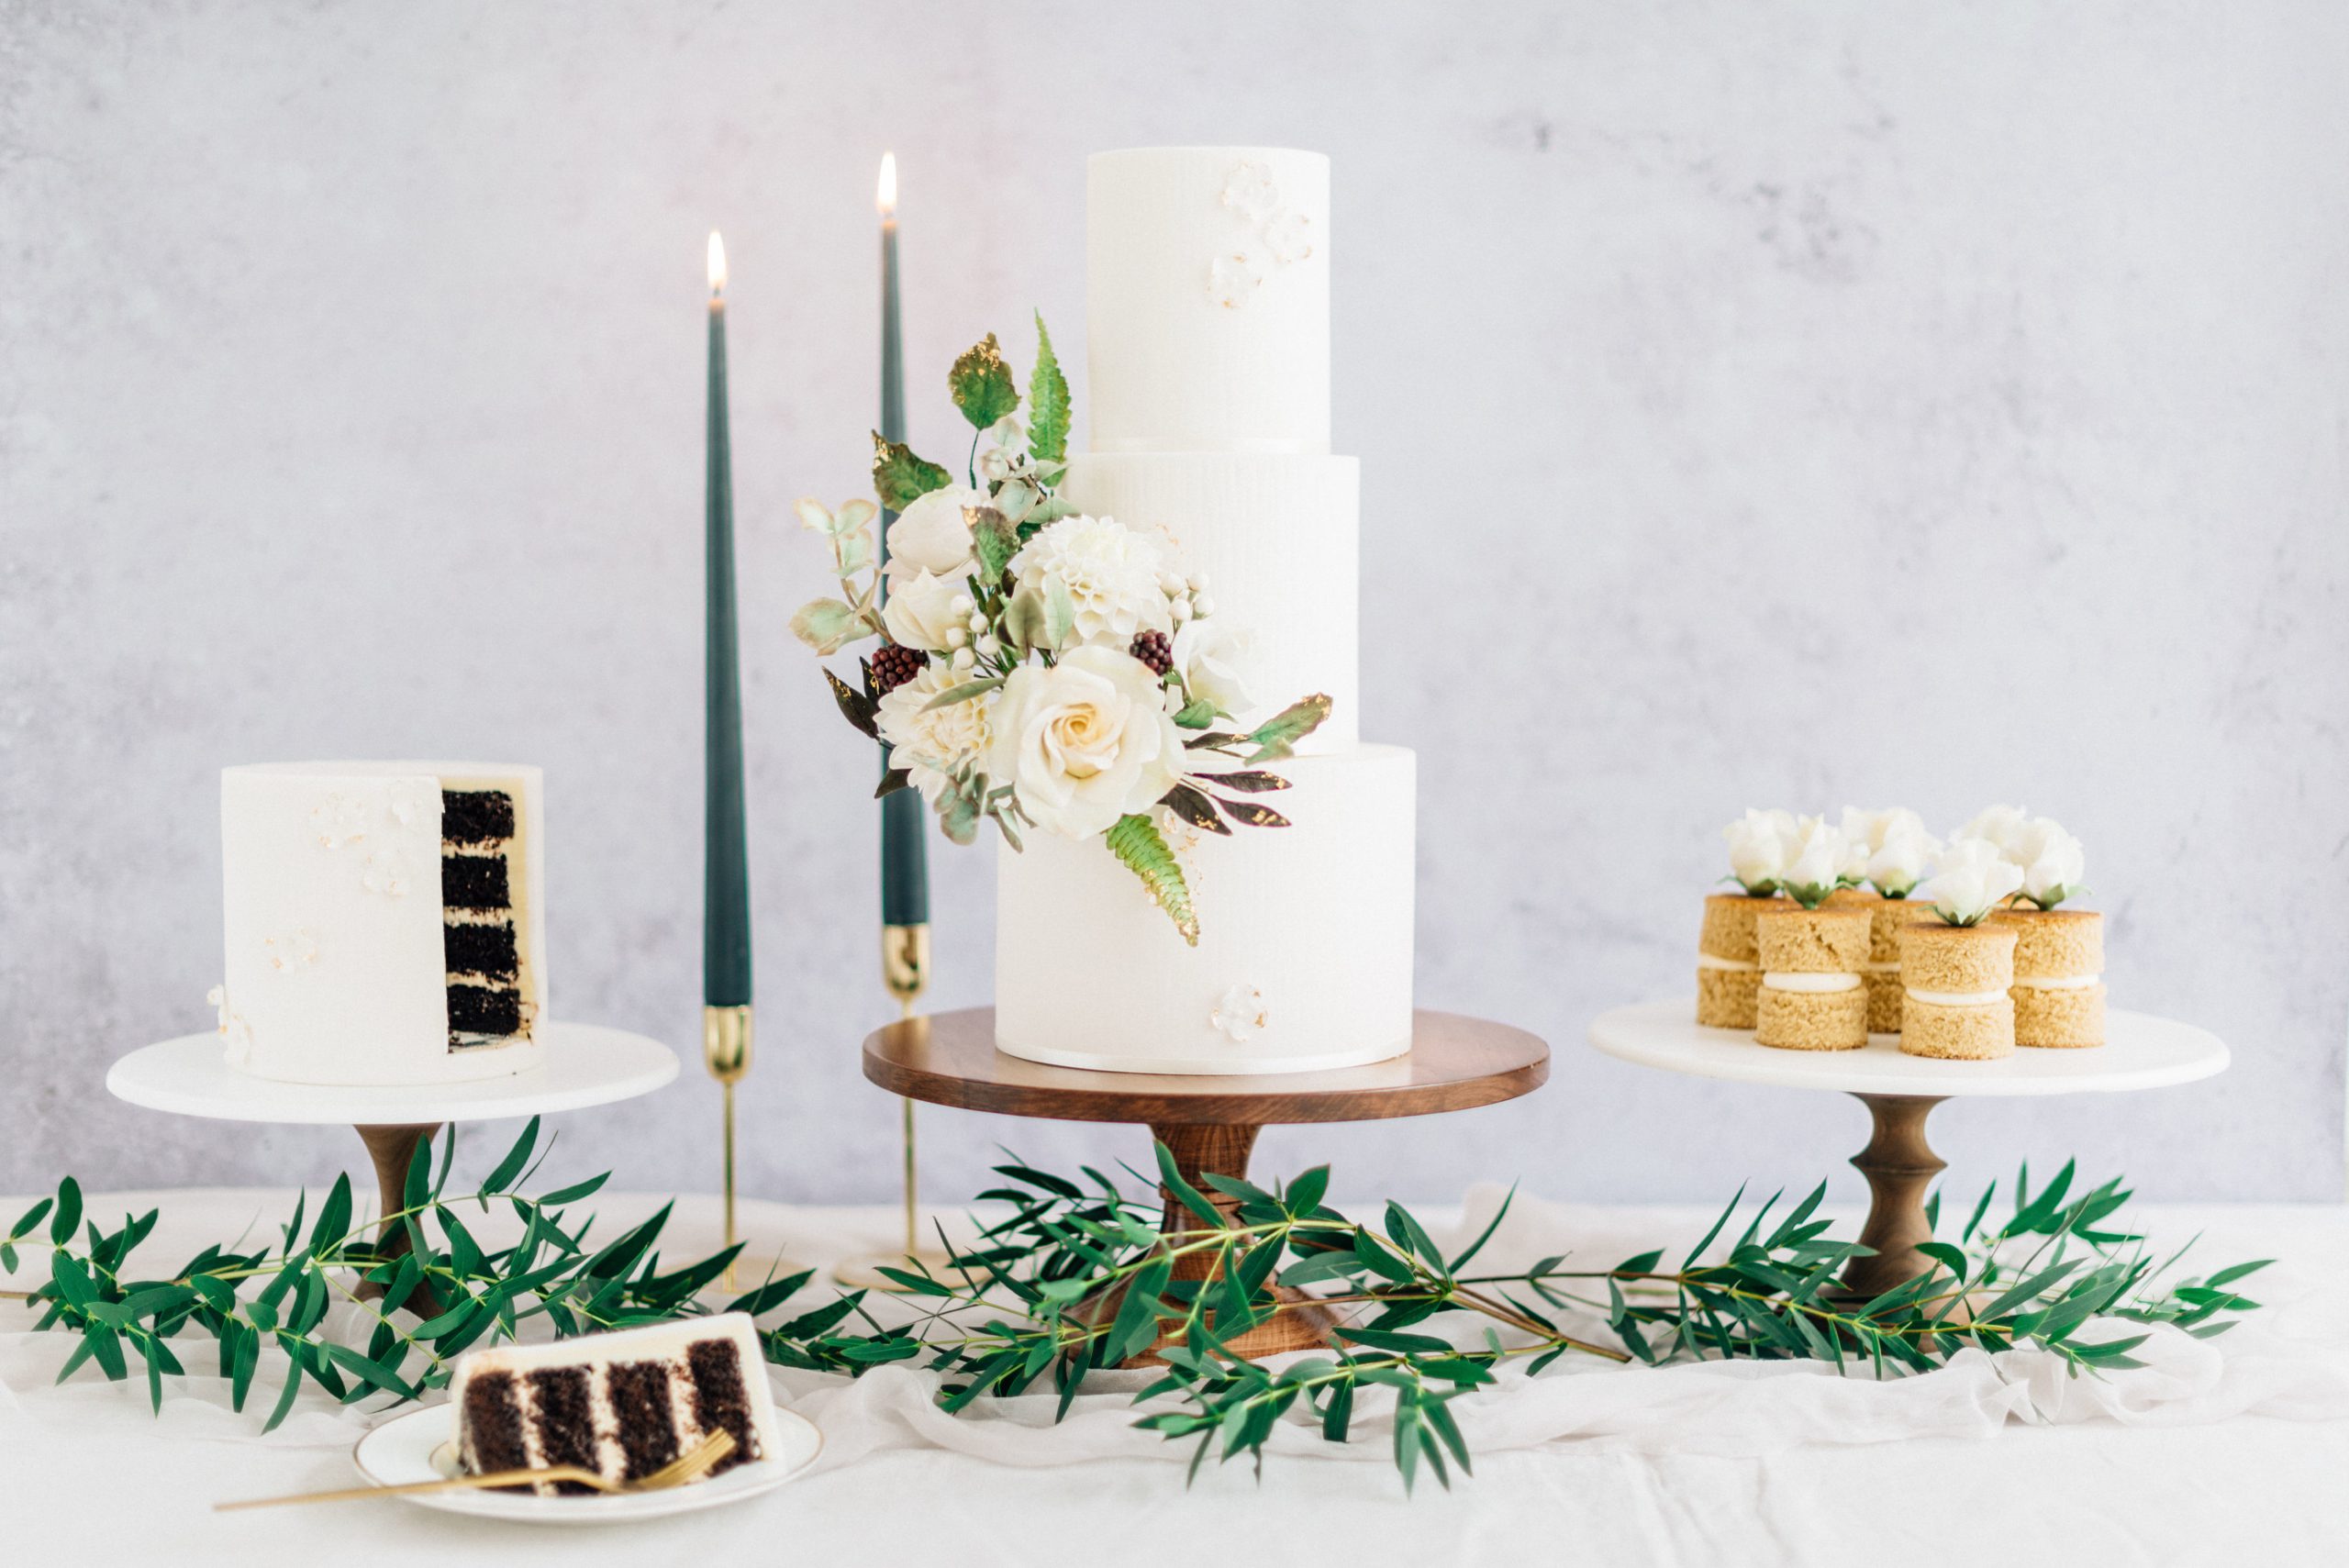 White wedding cake with sugar flowers, small chocolate cake and mini cakes